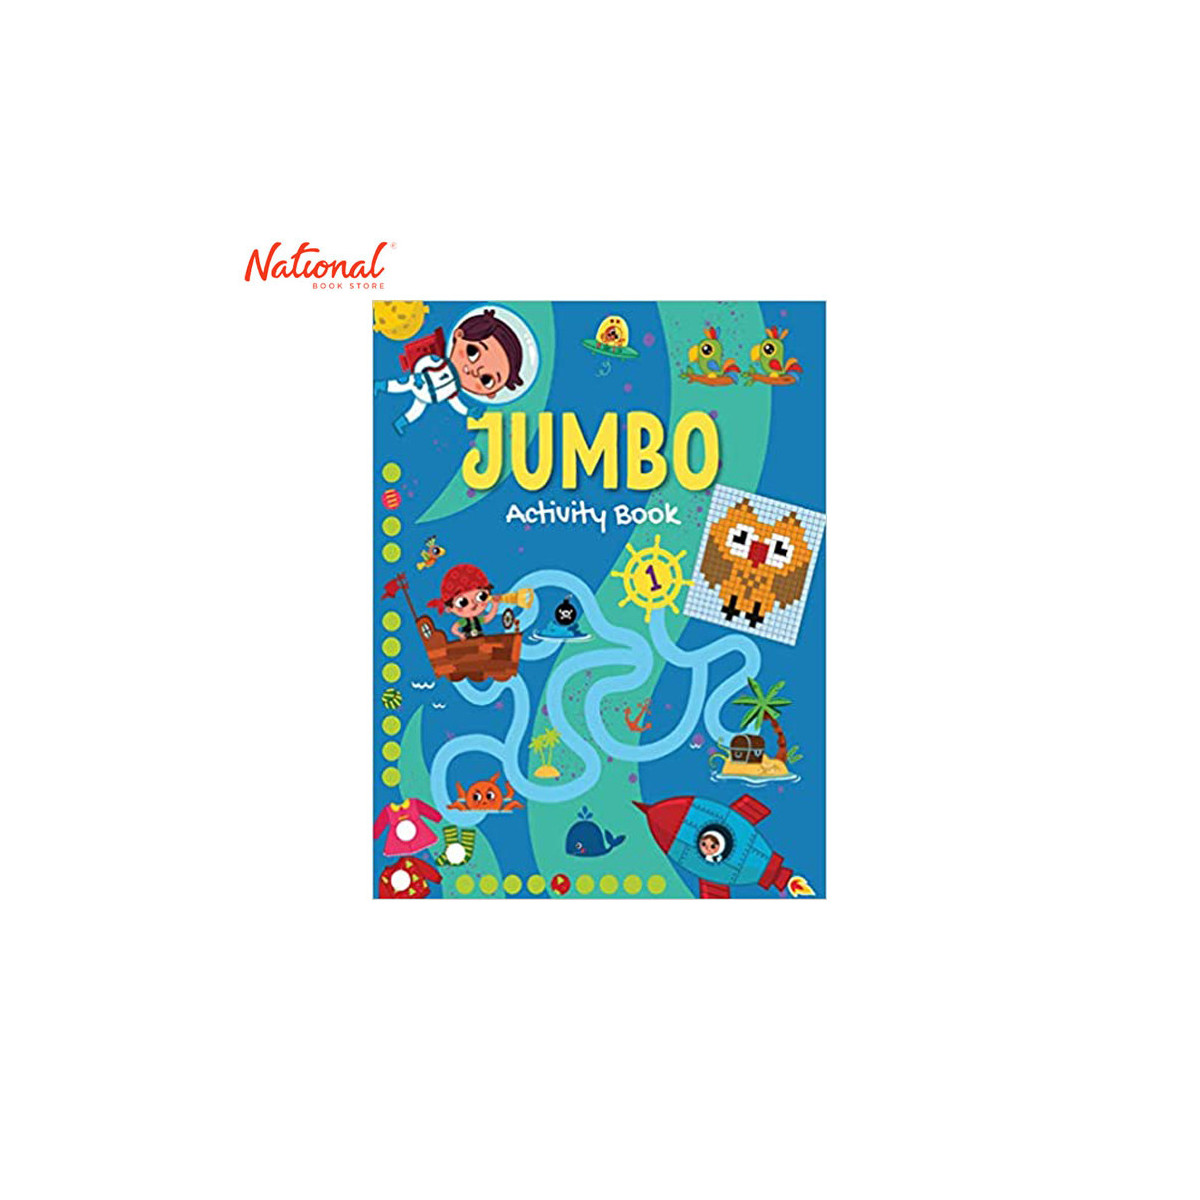 Jumbo Activity Book 1 Trade Paperback by Pegasus